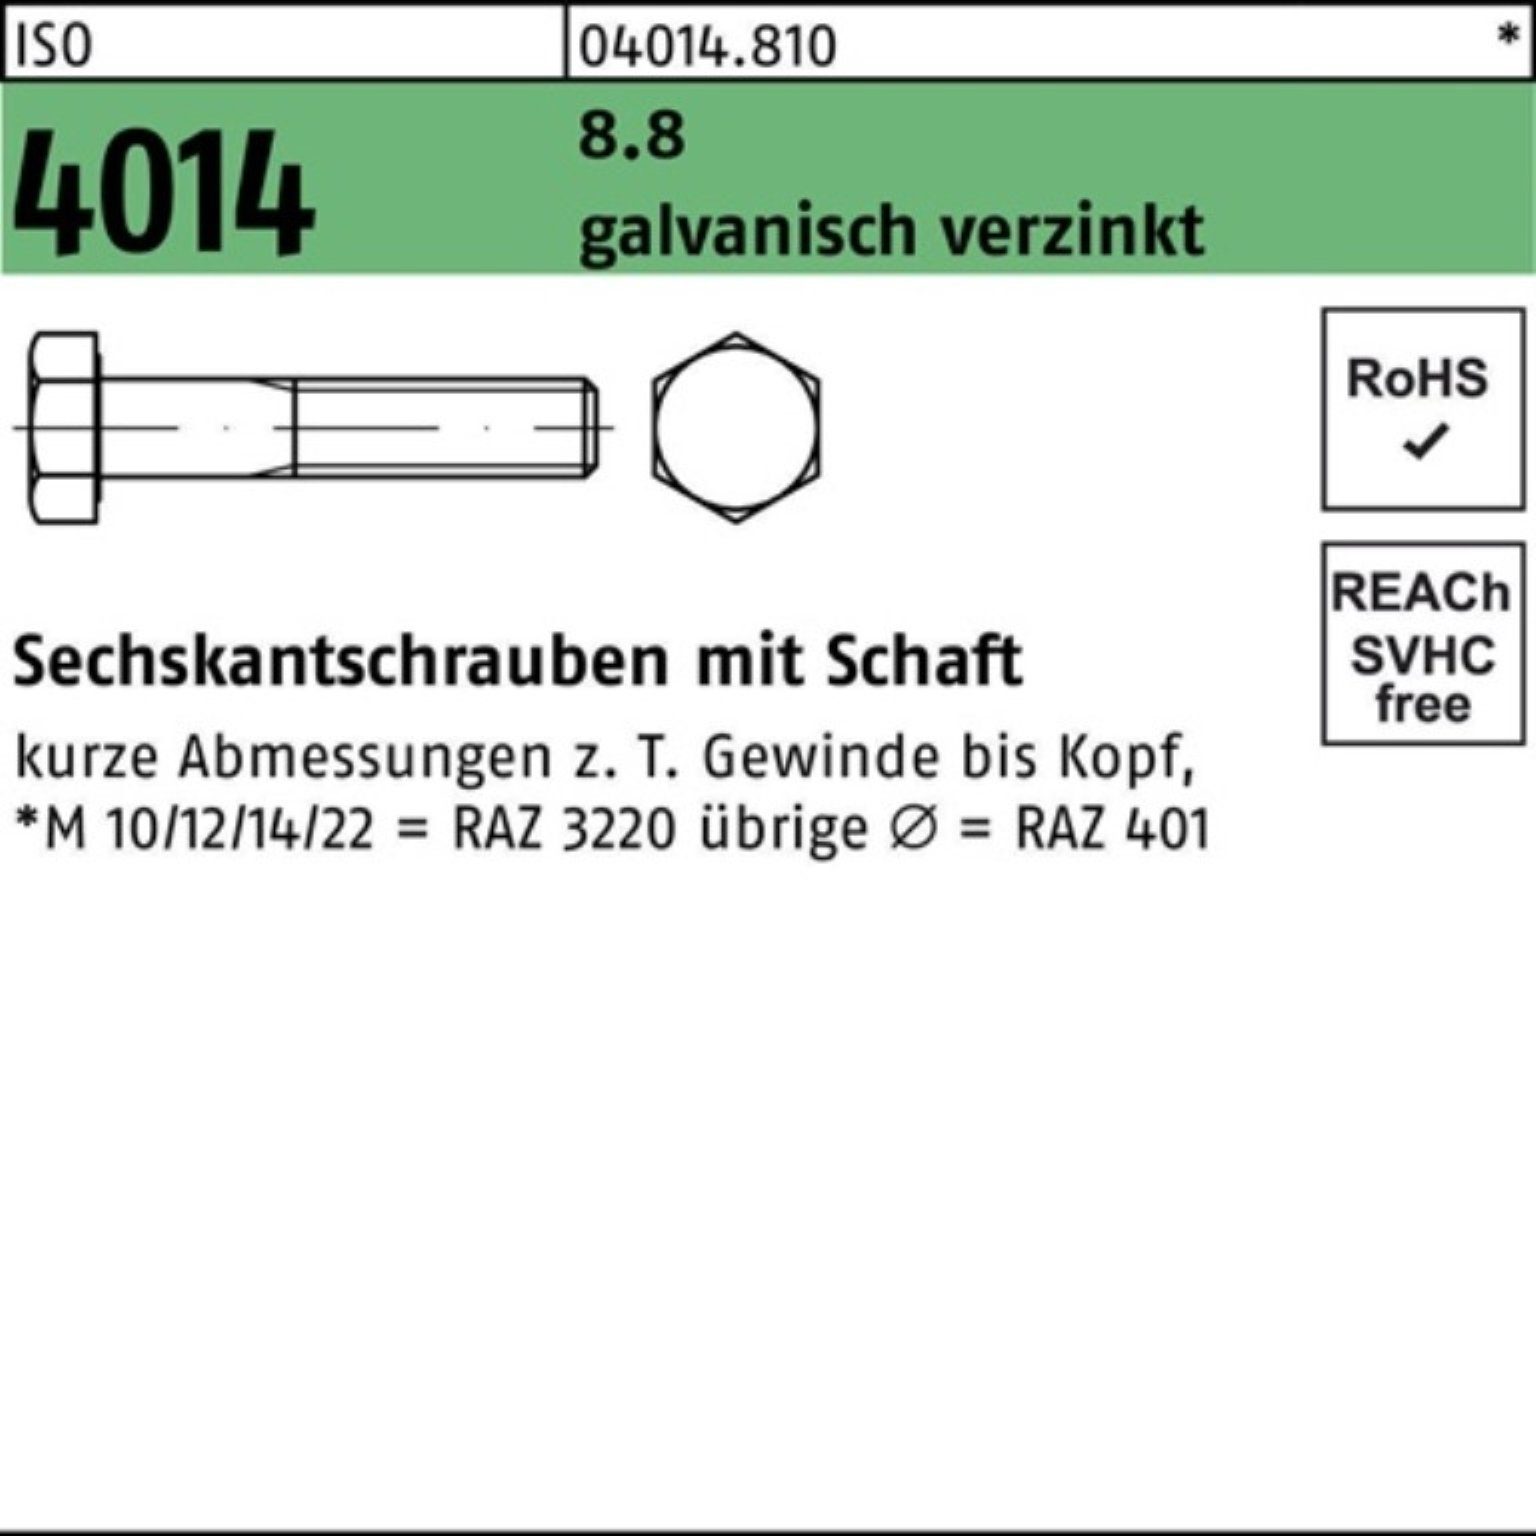 Bufab Sechskantschraube 100er Pack Sechskantschraube ISO 4014 Schaft M42x 260 8.8 galv.verz. 1 | Schrauben